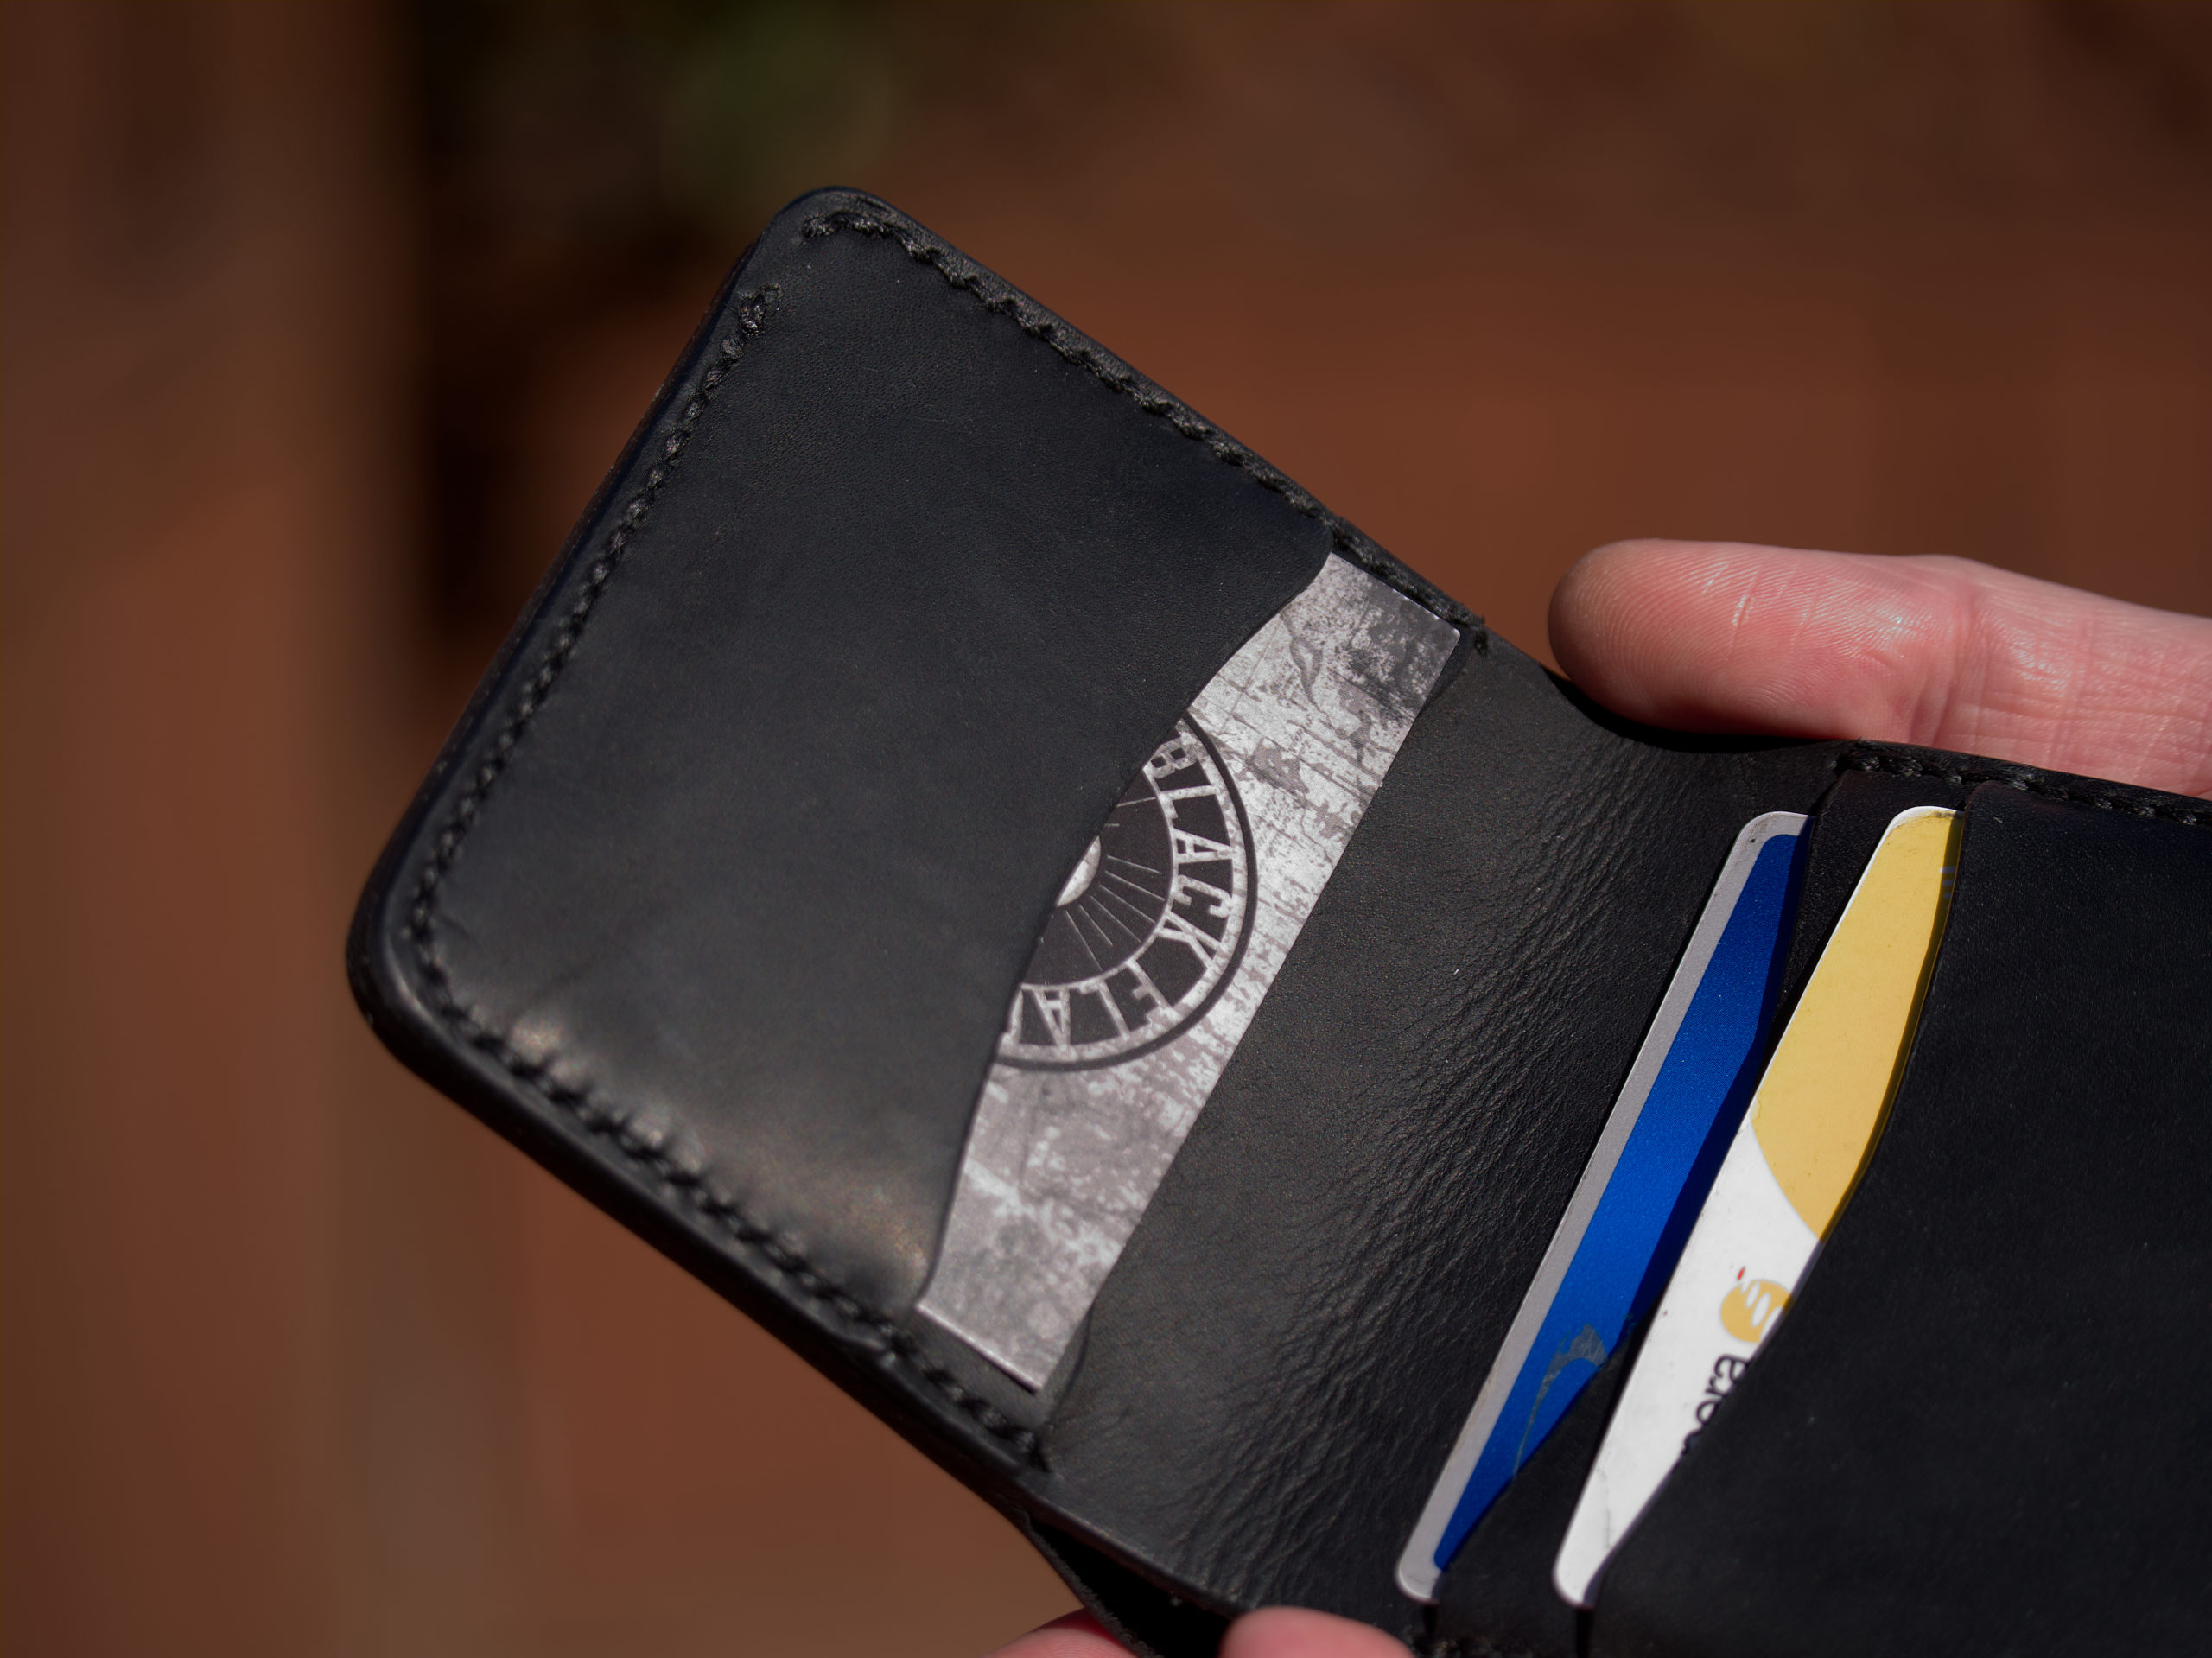 Black Flag Leather Goods - Teach Bifold Wallet